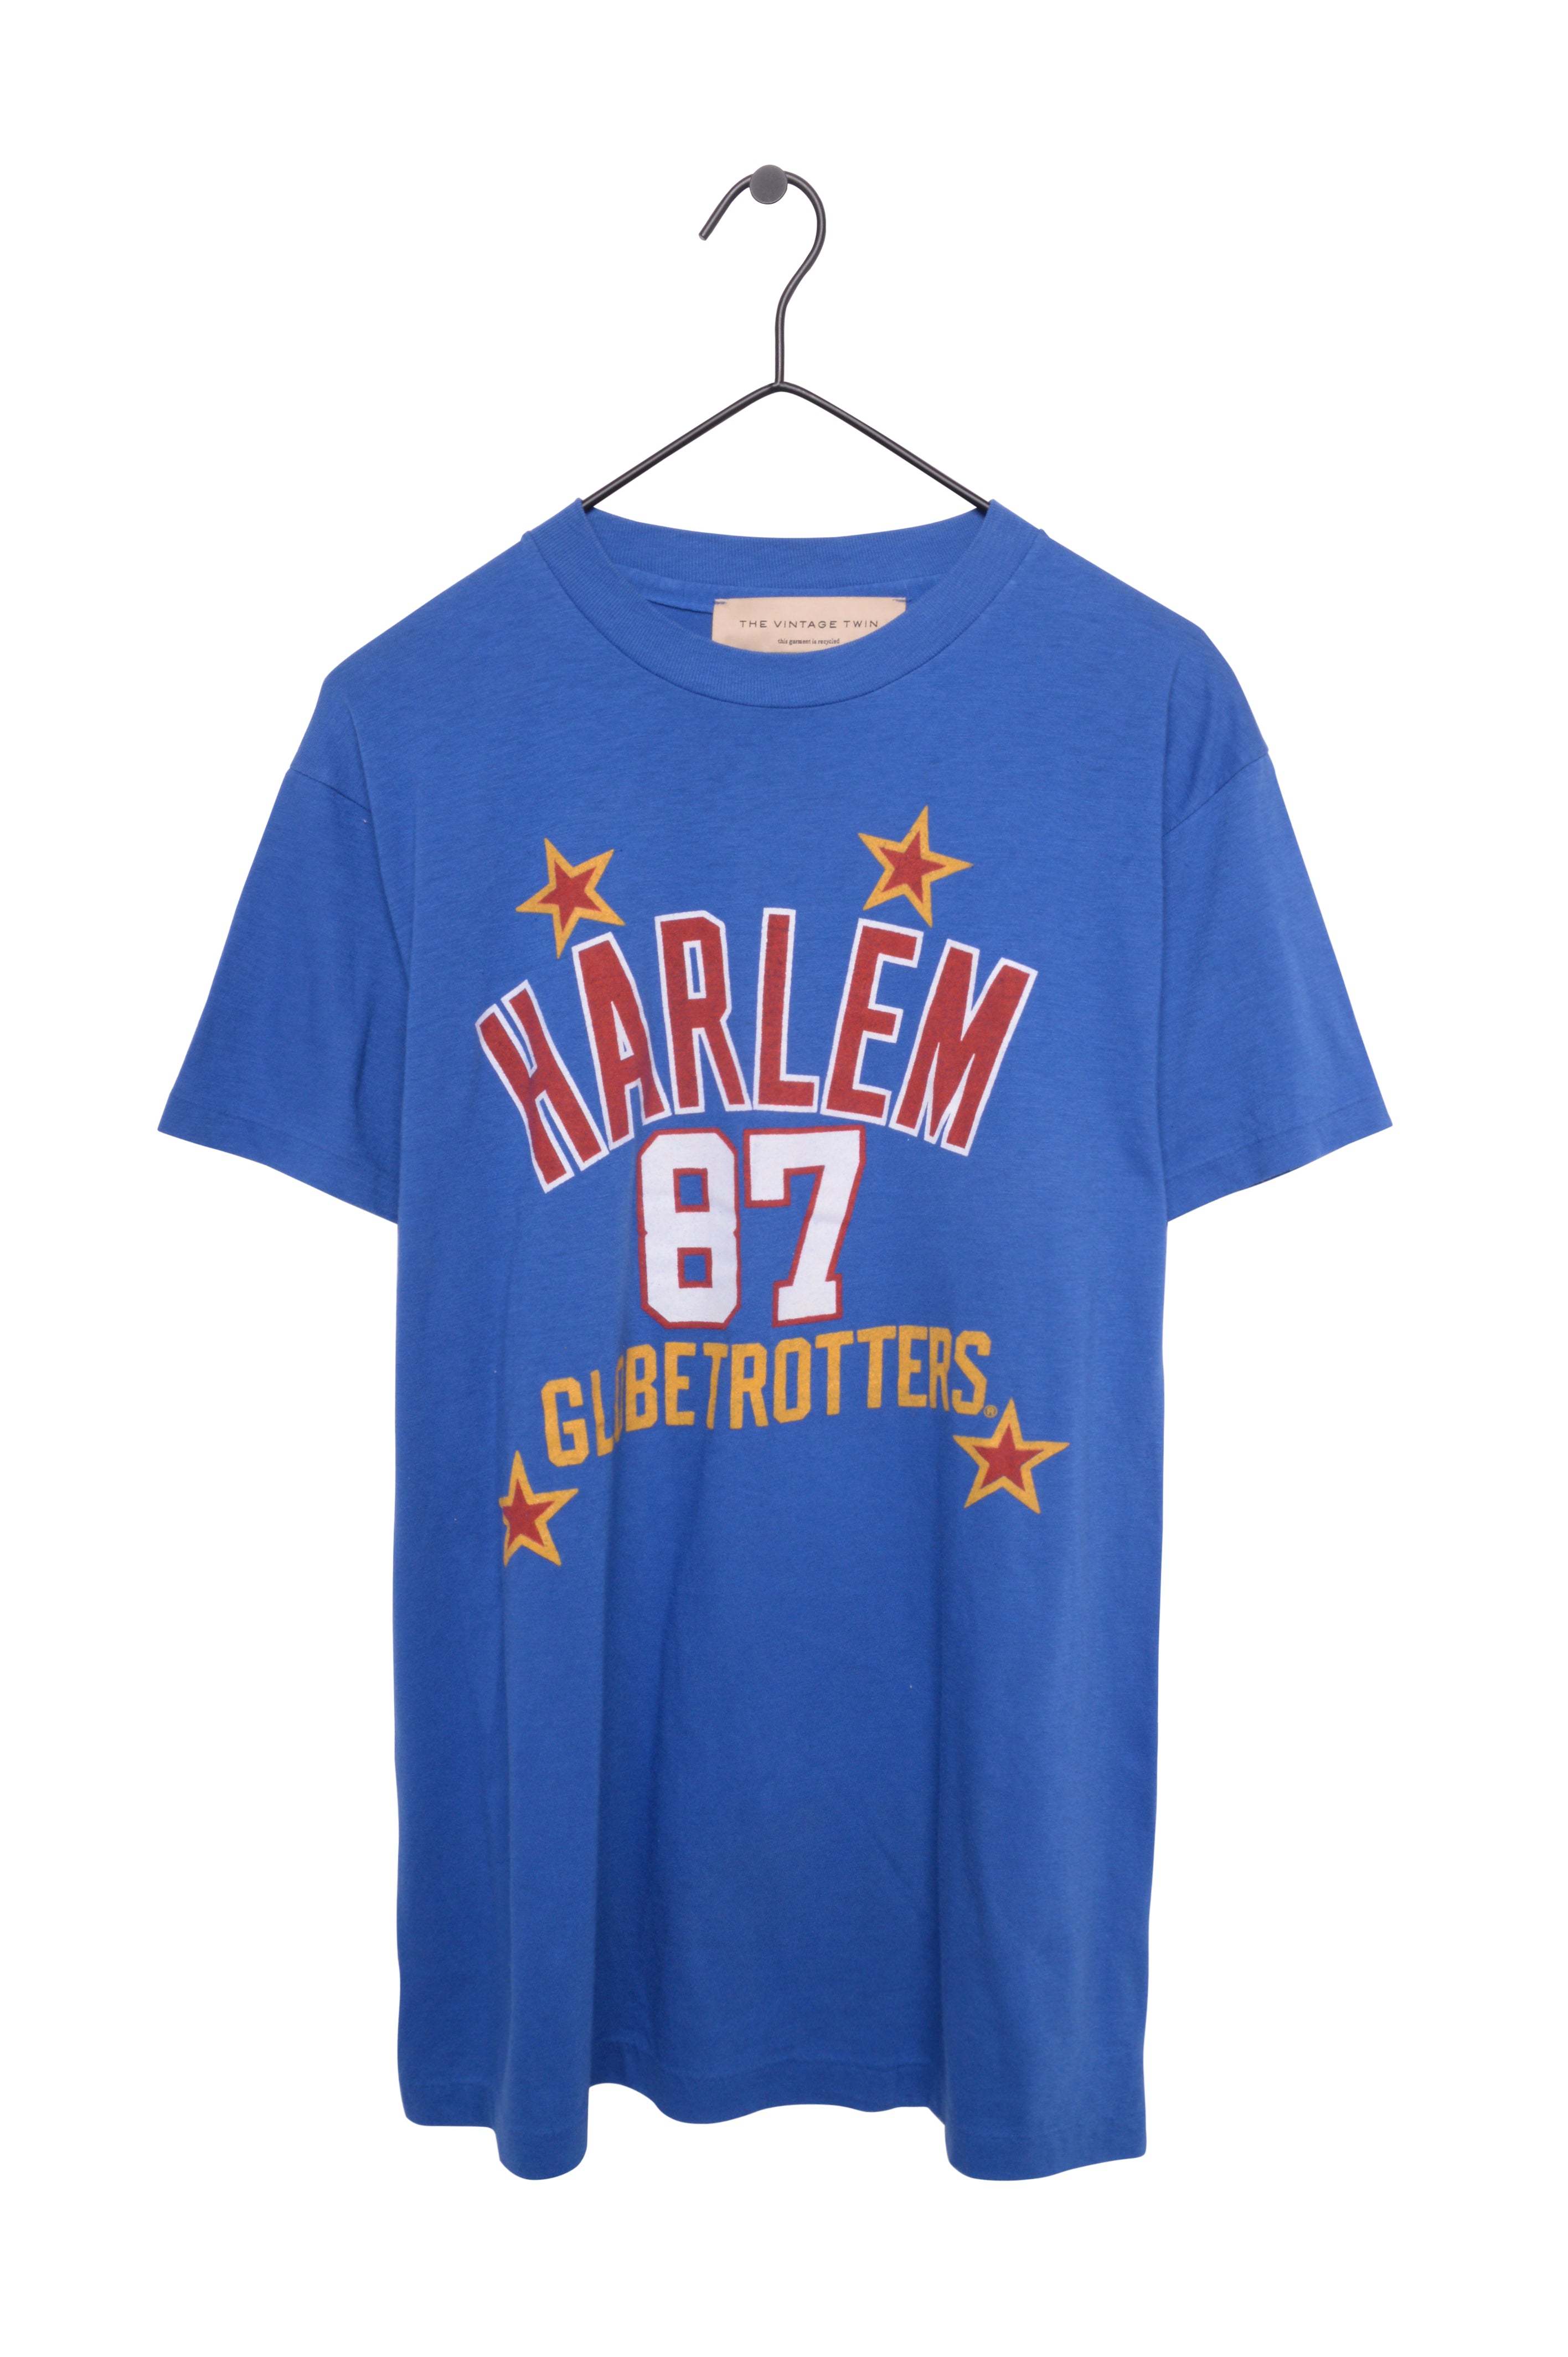 Buy the Harlem Globetrotters Jersey Sz M